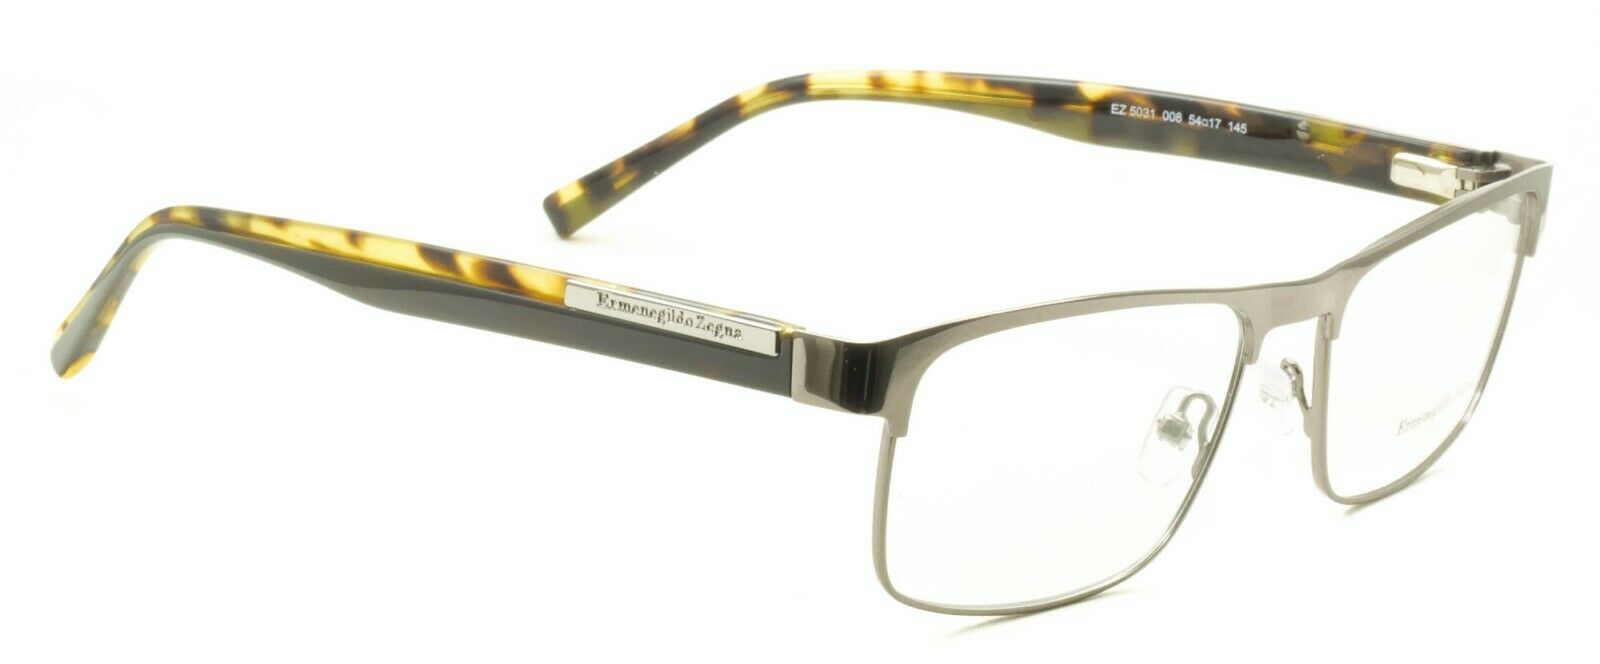 ERMENEGILDO ZEGNA EZ 5031 008 54mm FRAMES Glasses Eyewear RX Optical New - Italy